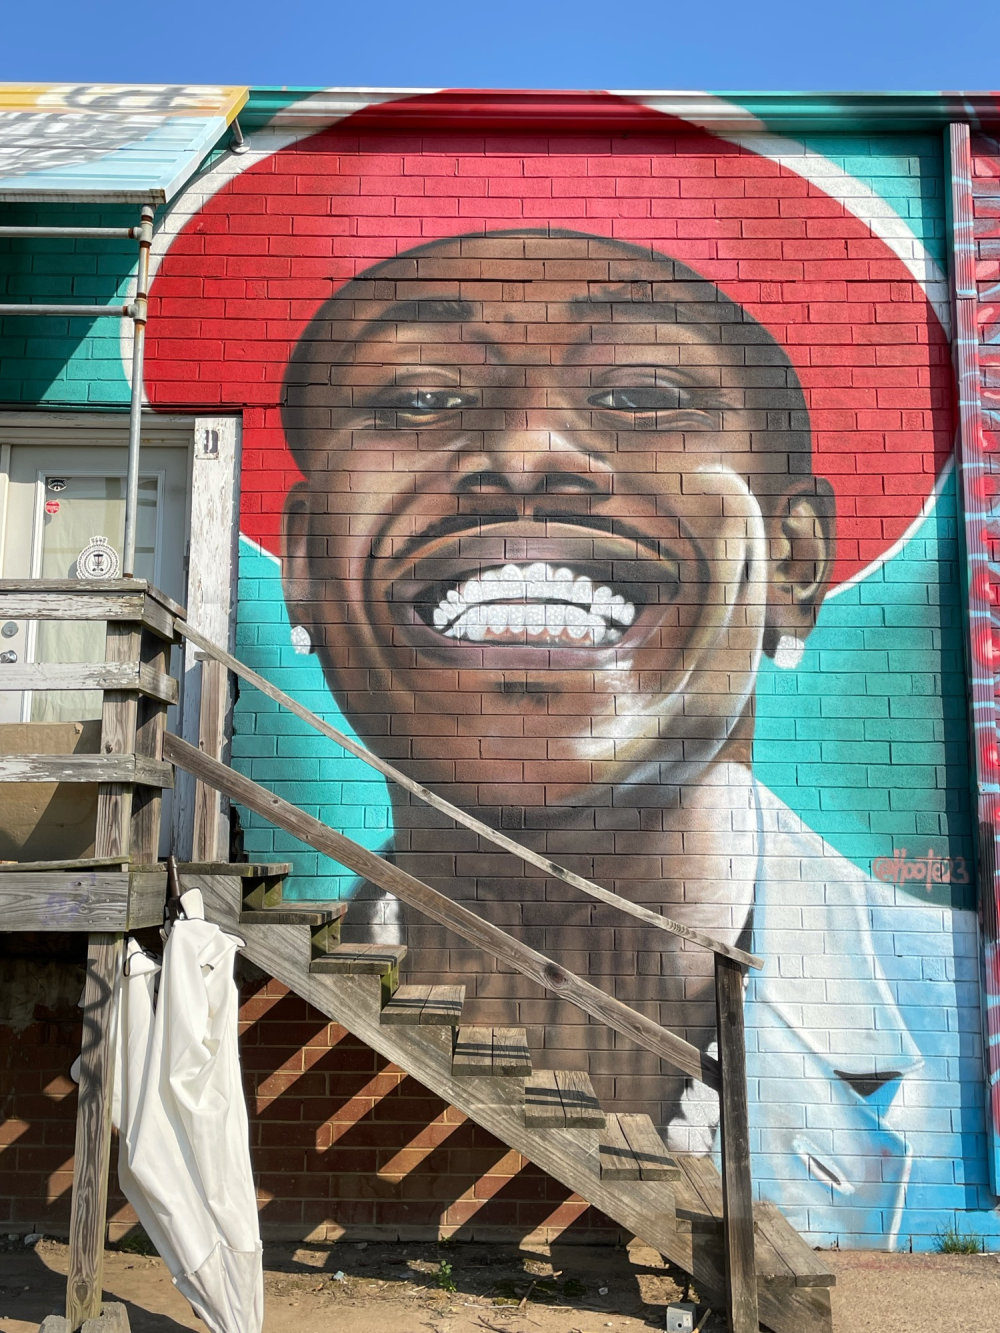 mural in Charlotte by artist Garrett Mallekoote. Tagged: Da Baby